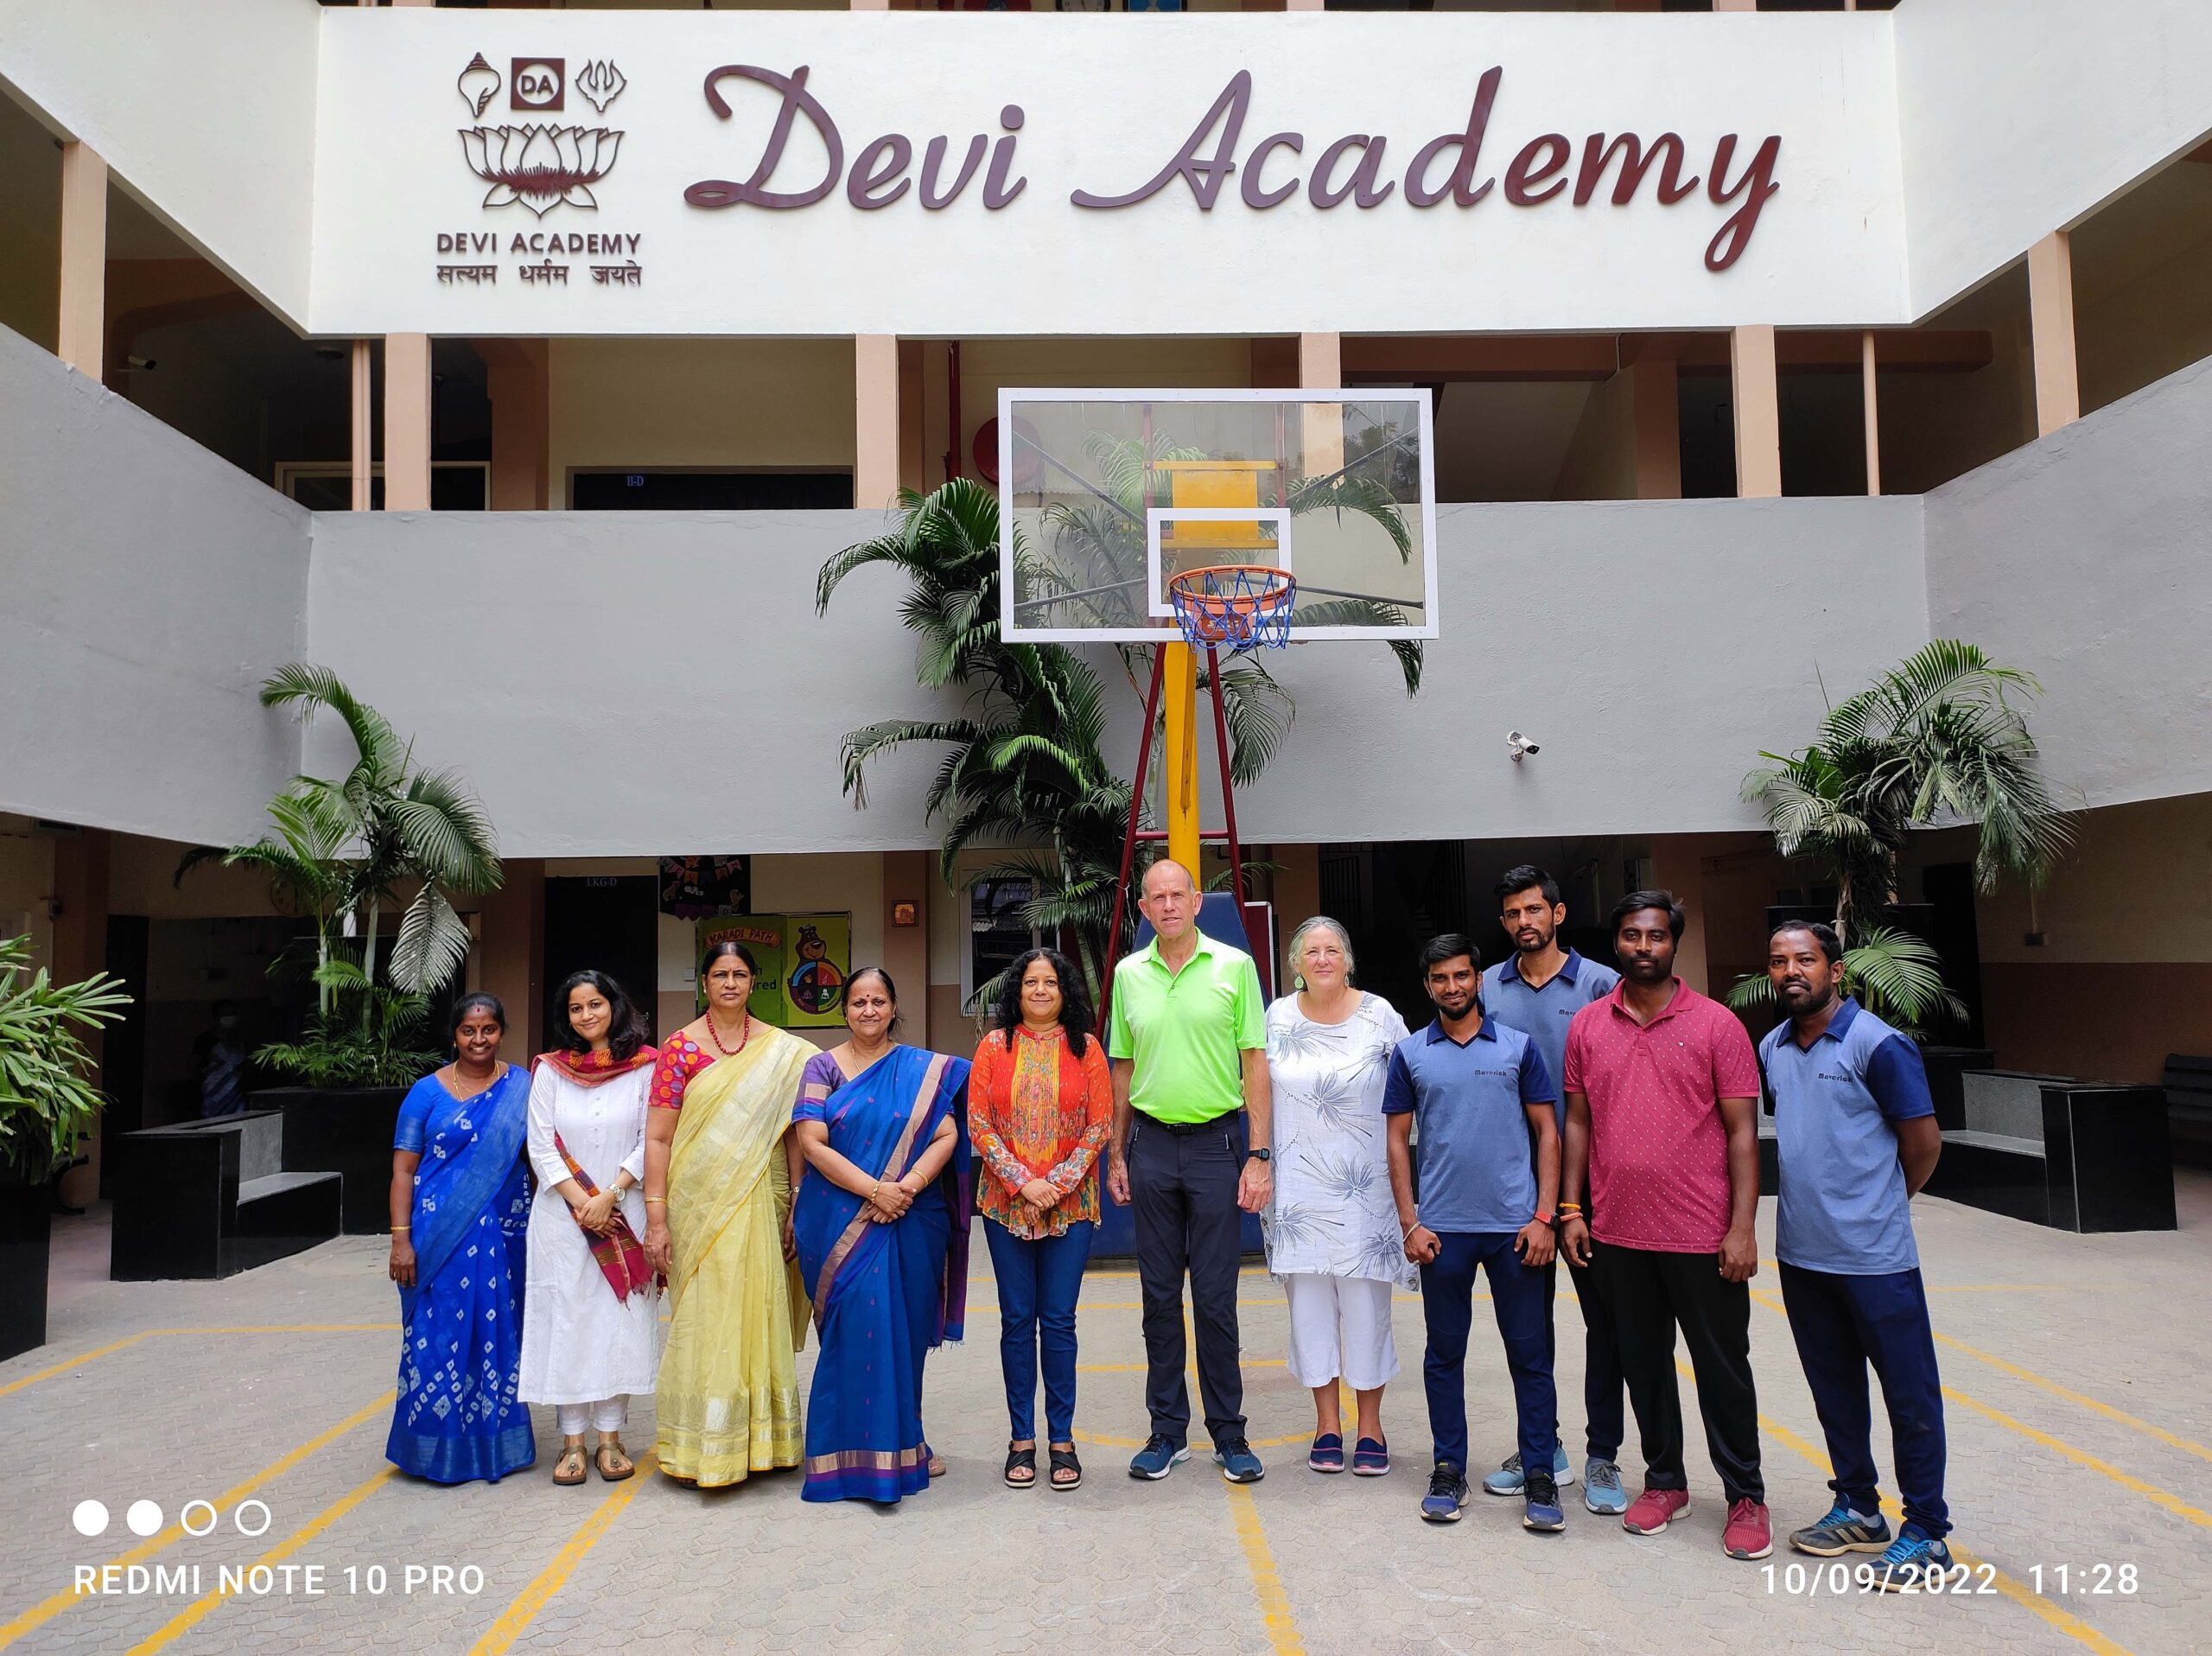 Chair of IPLA visits Devi Academy